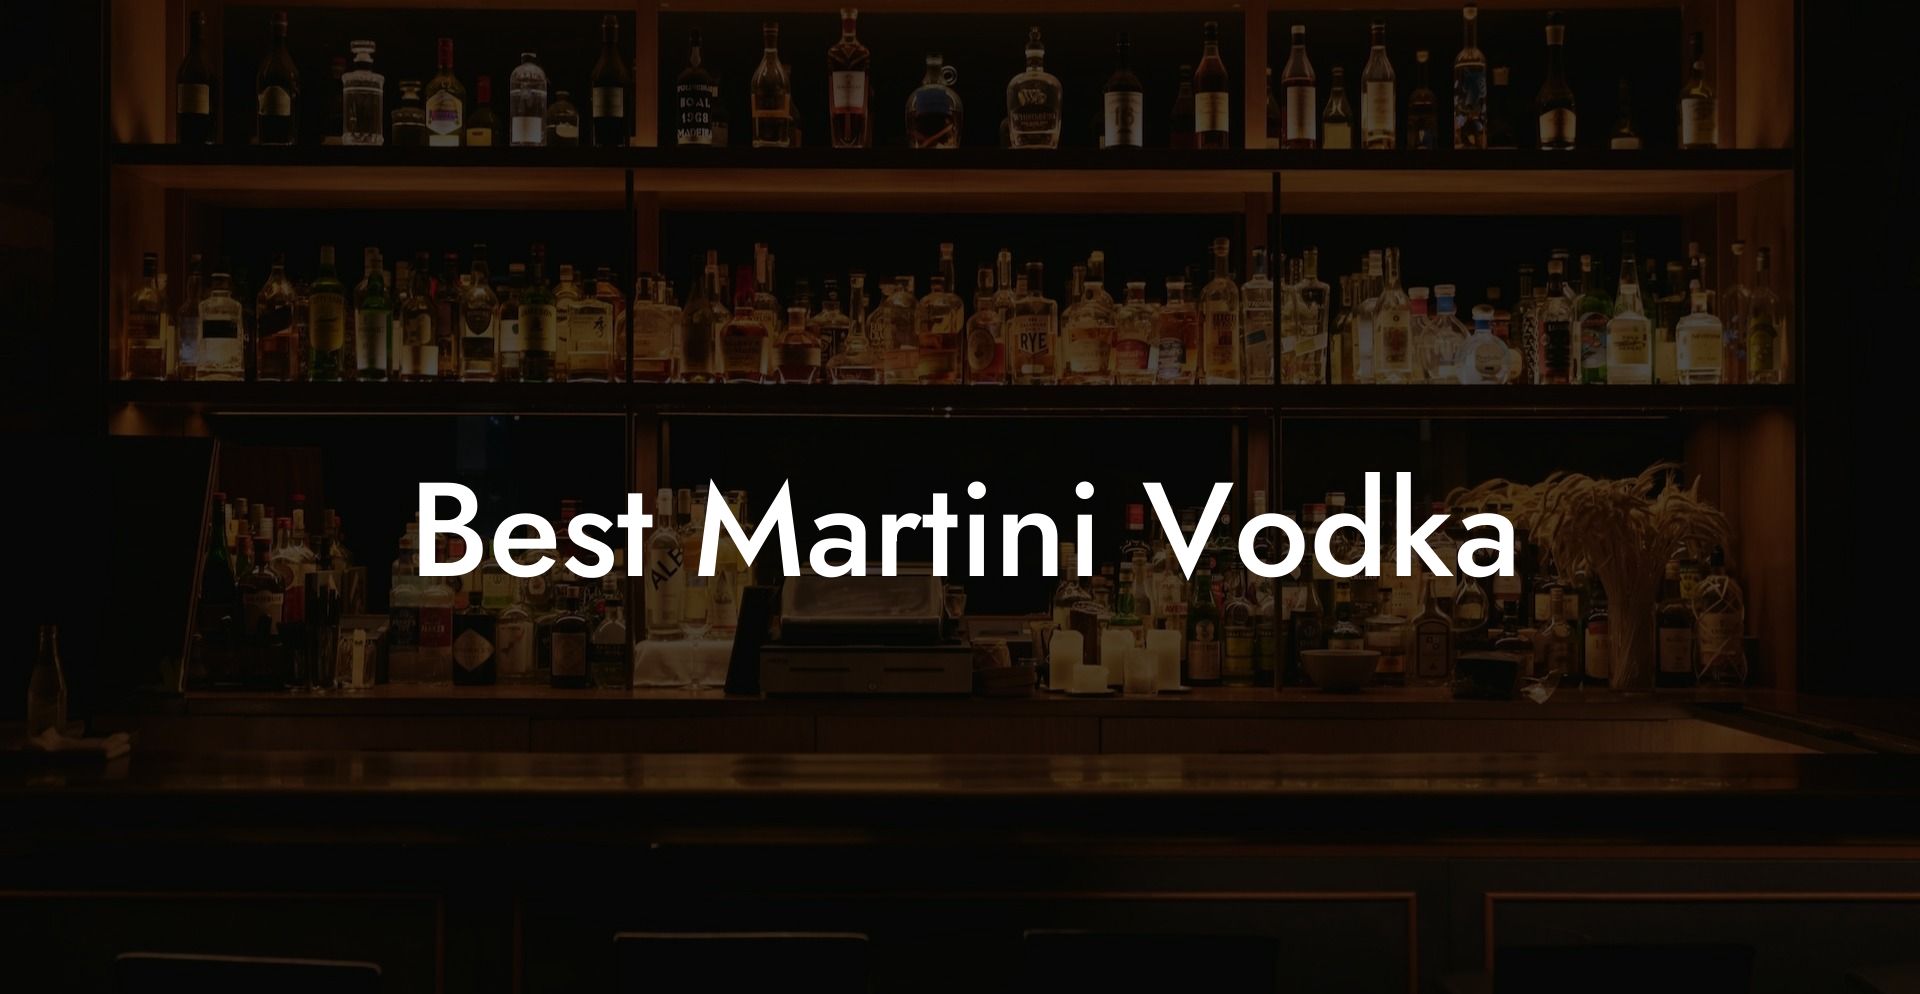 Best Martini Vodka